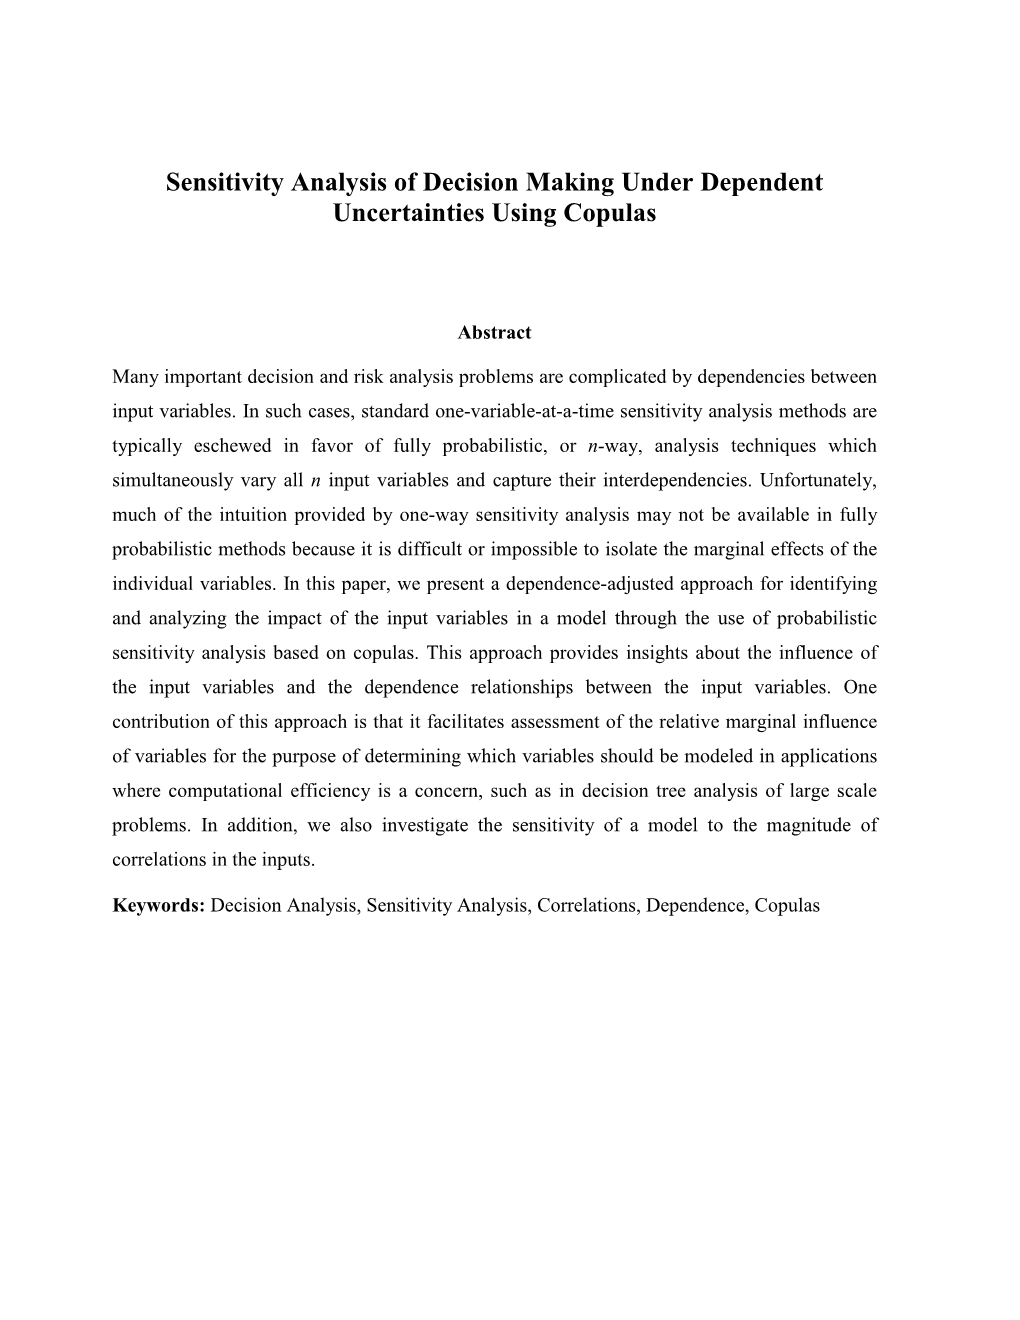 Sensitivity Analysis of Decision Making Under Dependent Uncertainties Using Copulas